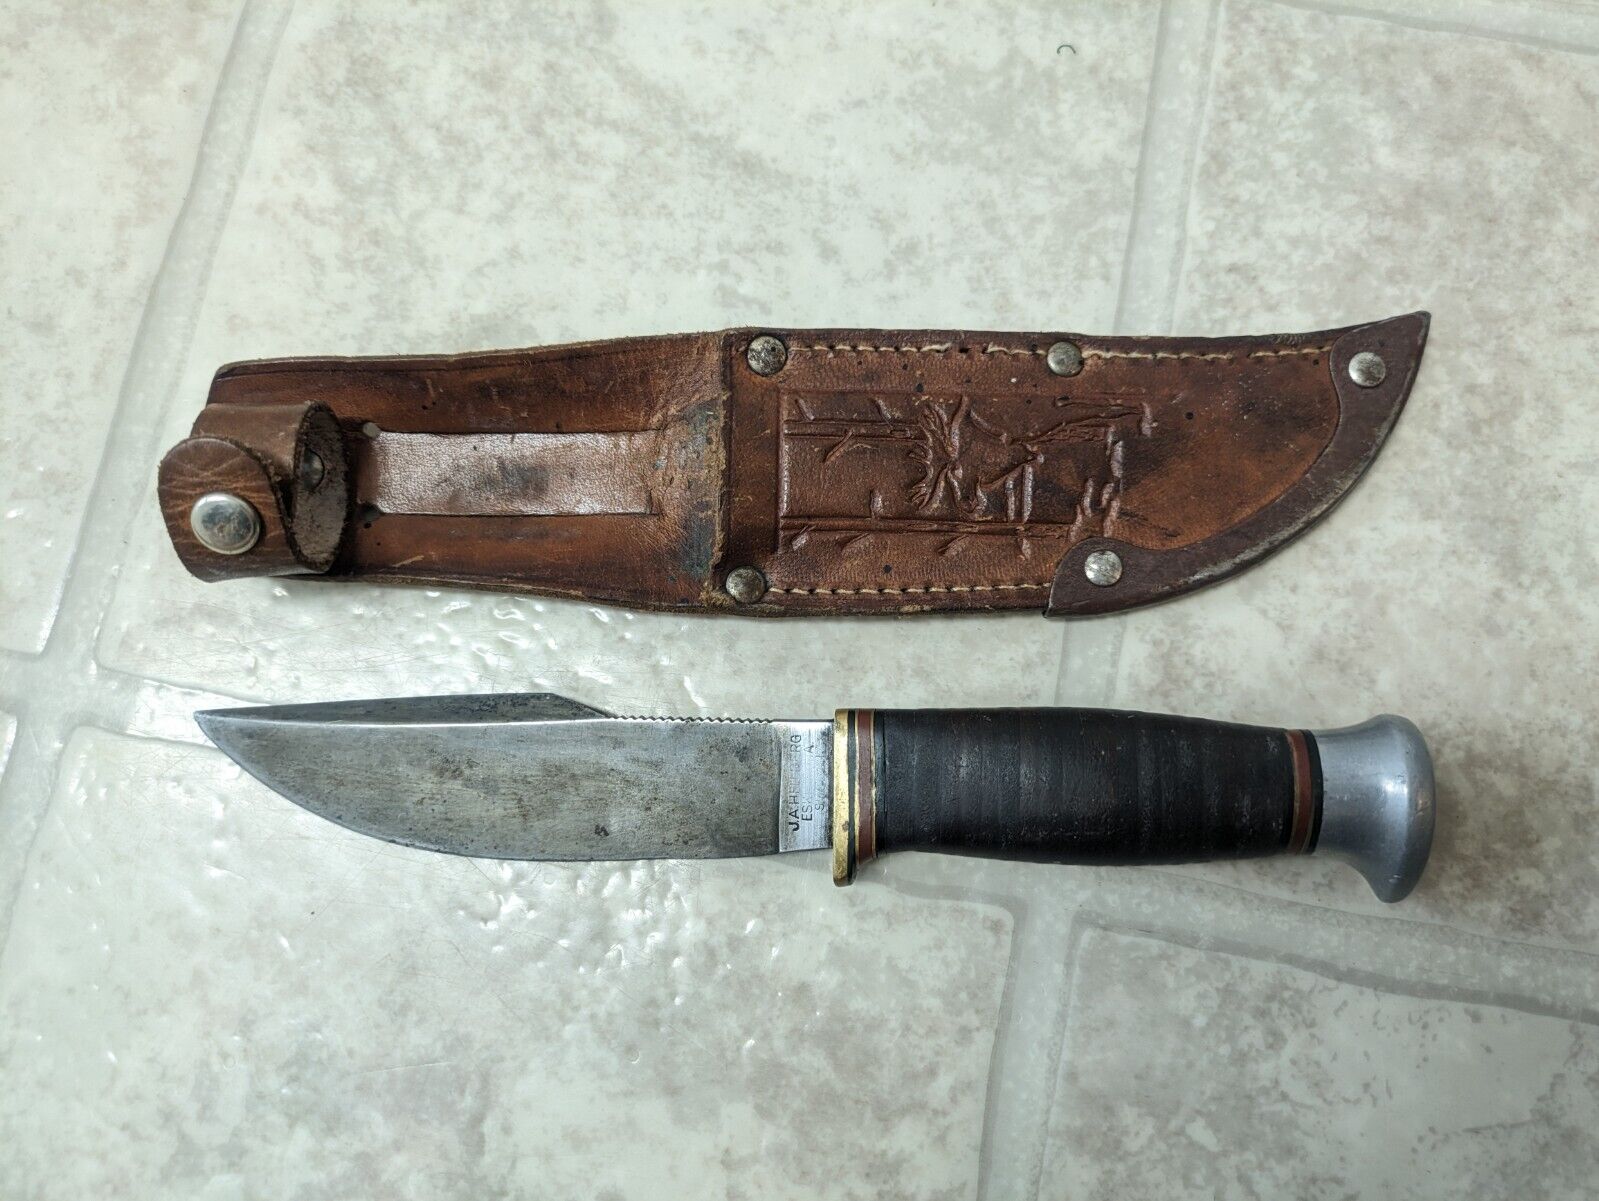 Vintage J.A. Hellberg Eskilstuna hunting knife in leather sheath, mad in Sweden